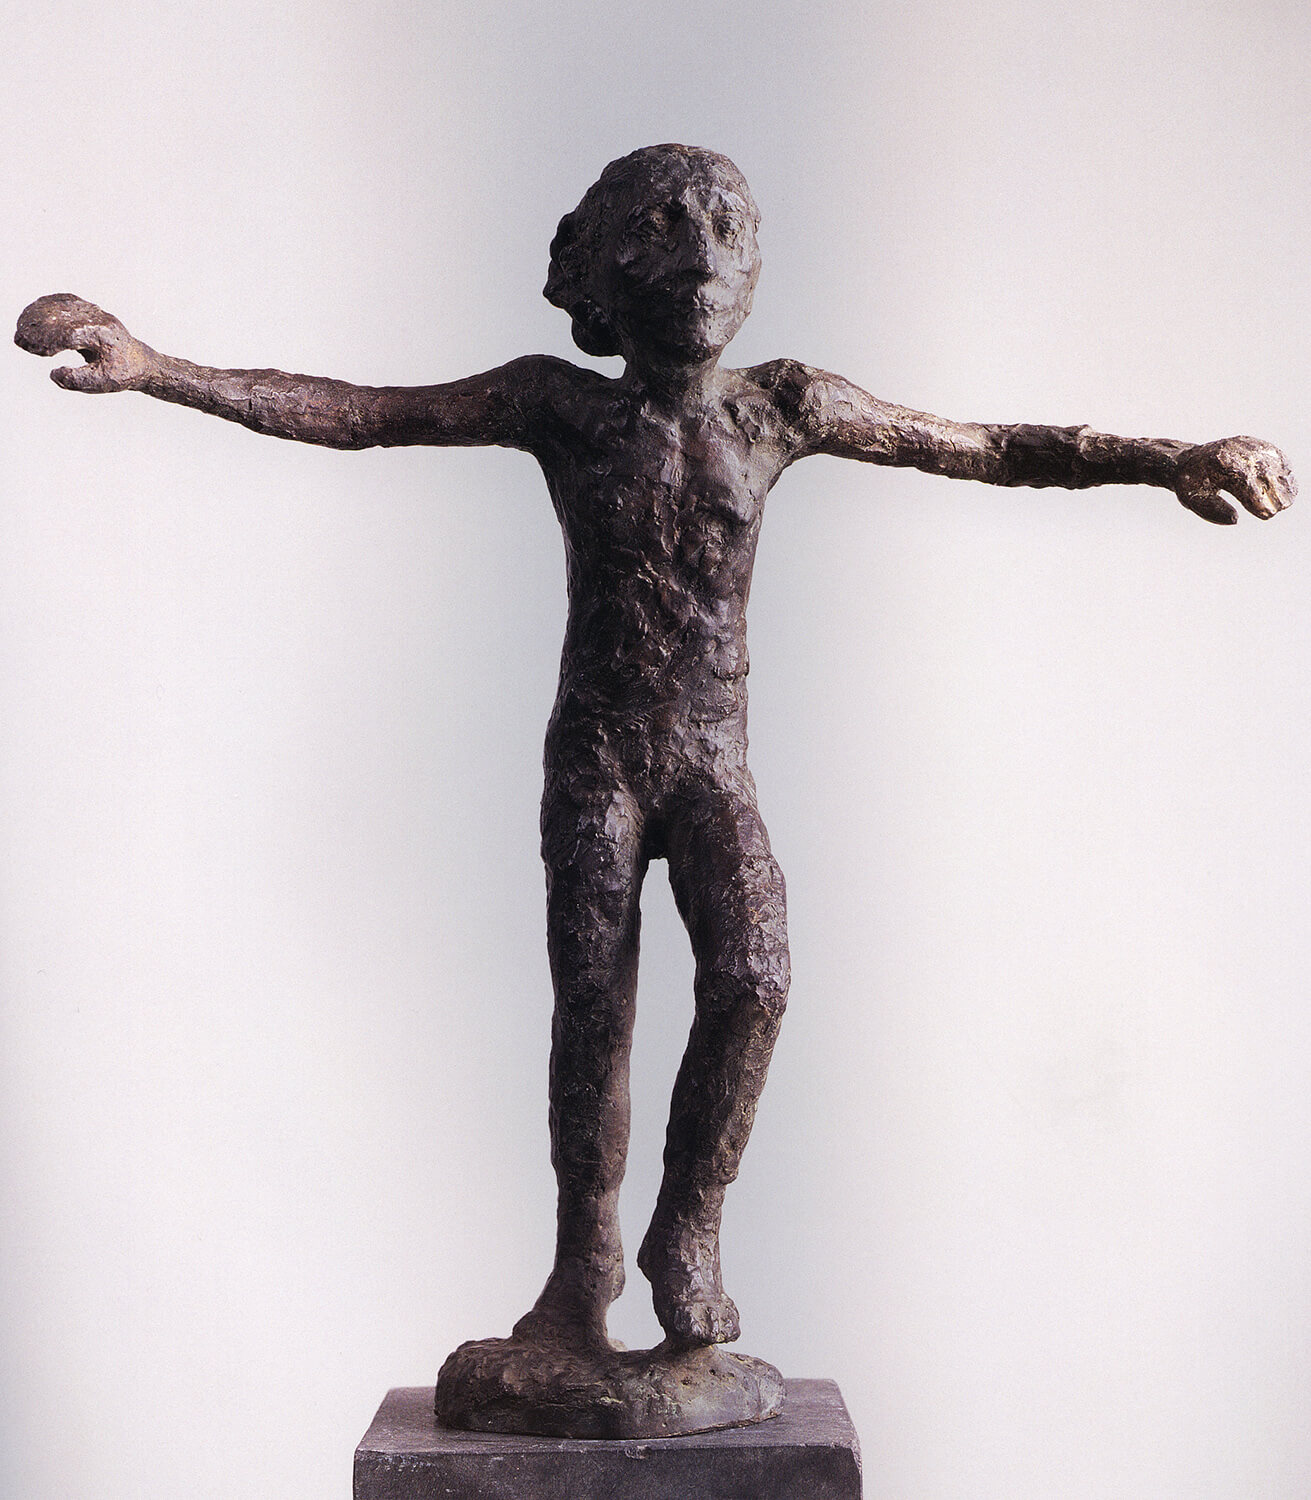 Emerita Pansowová, For Gret Palucca, 1985, bronze, height 45 cm